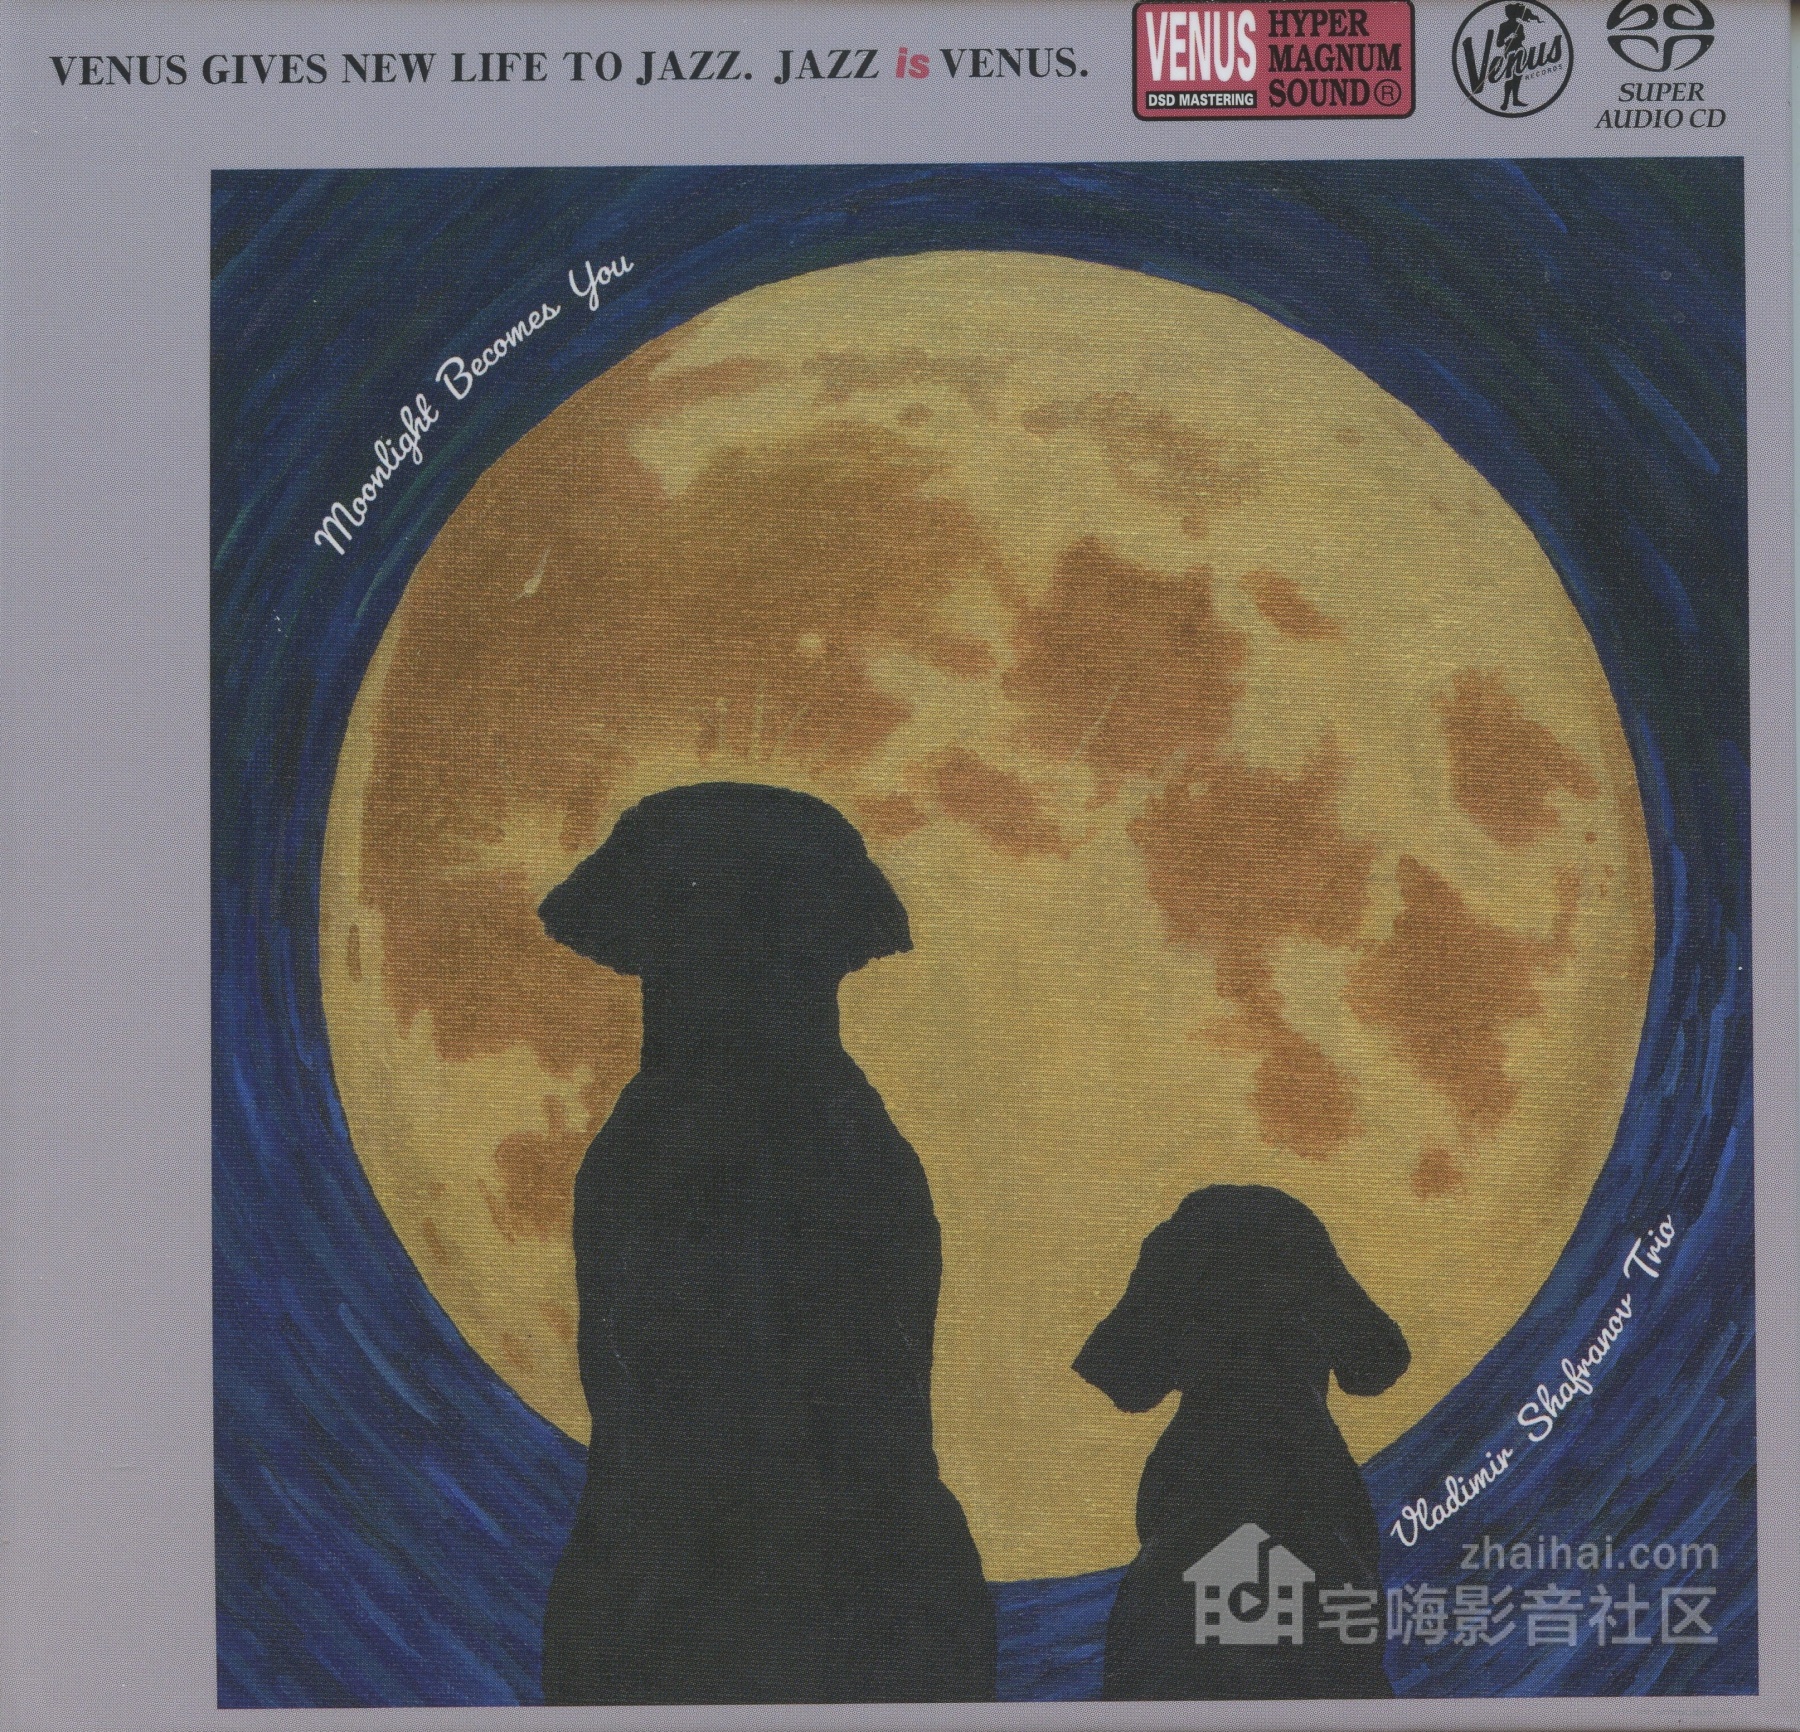 [VHGD368] Vladimir Shafranov Trio - Moonlight Becomes You VHGD-3682021 SACDISO-front.jpg